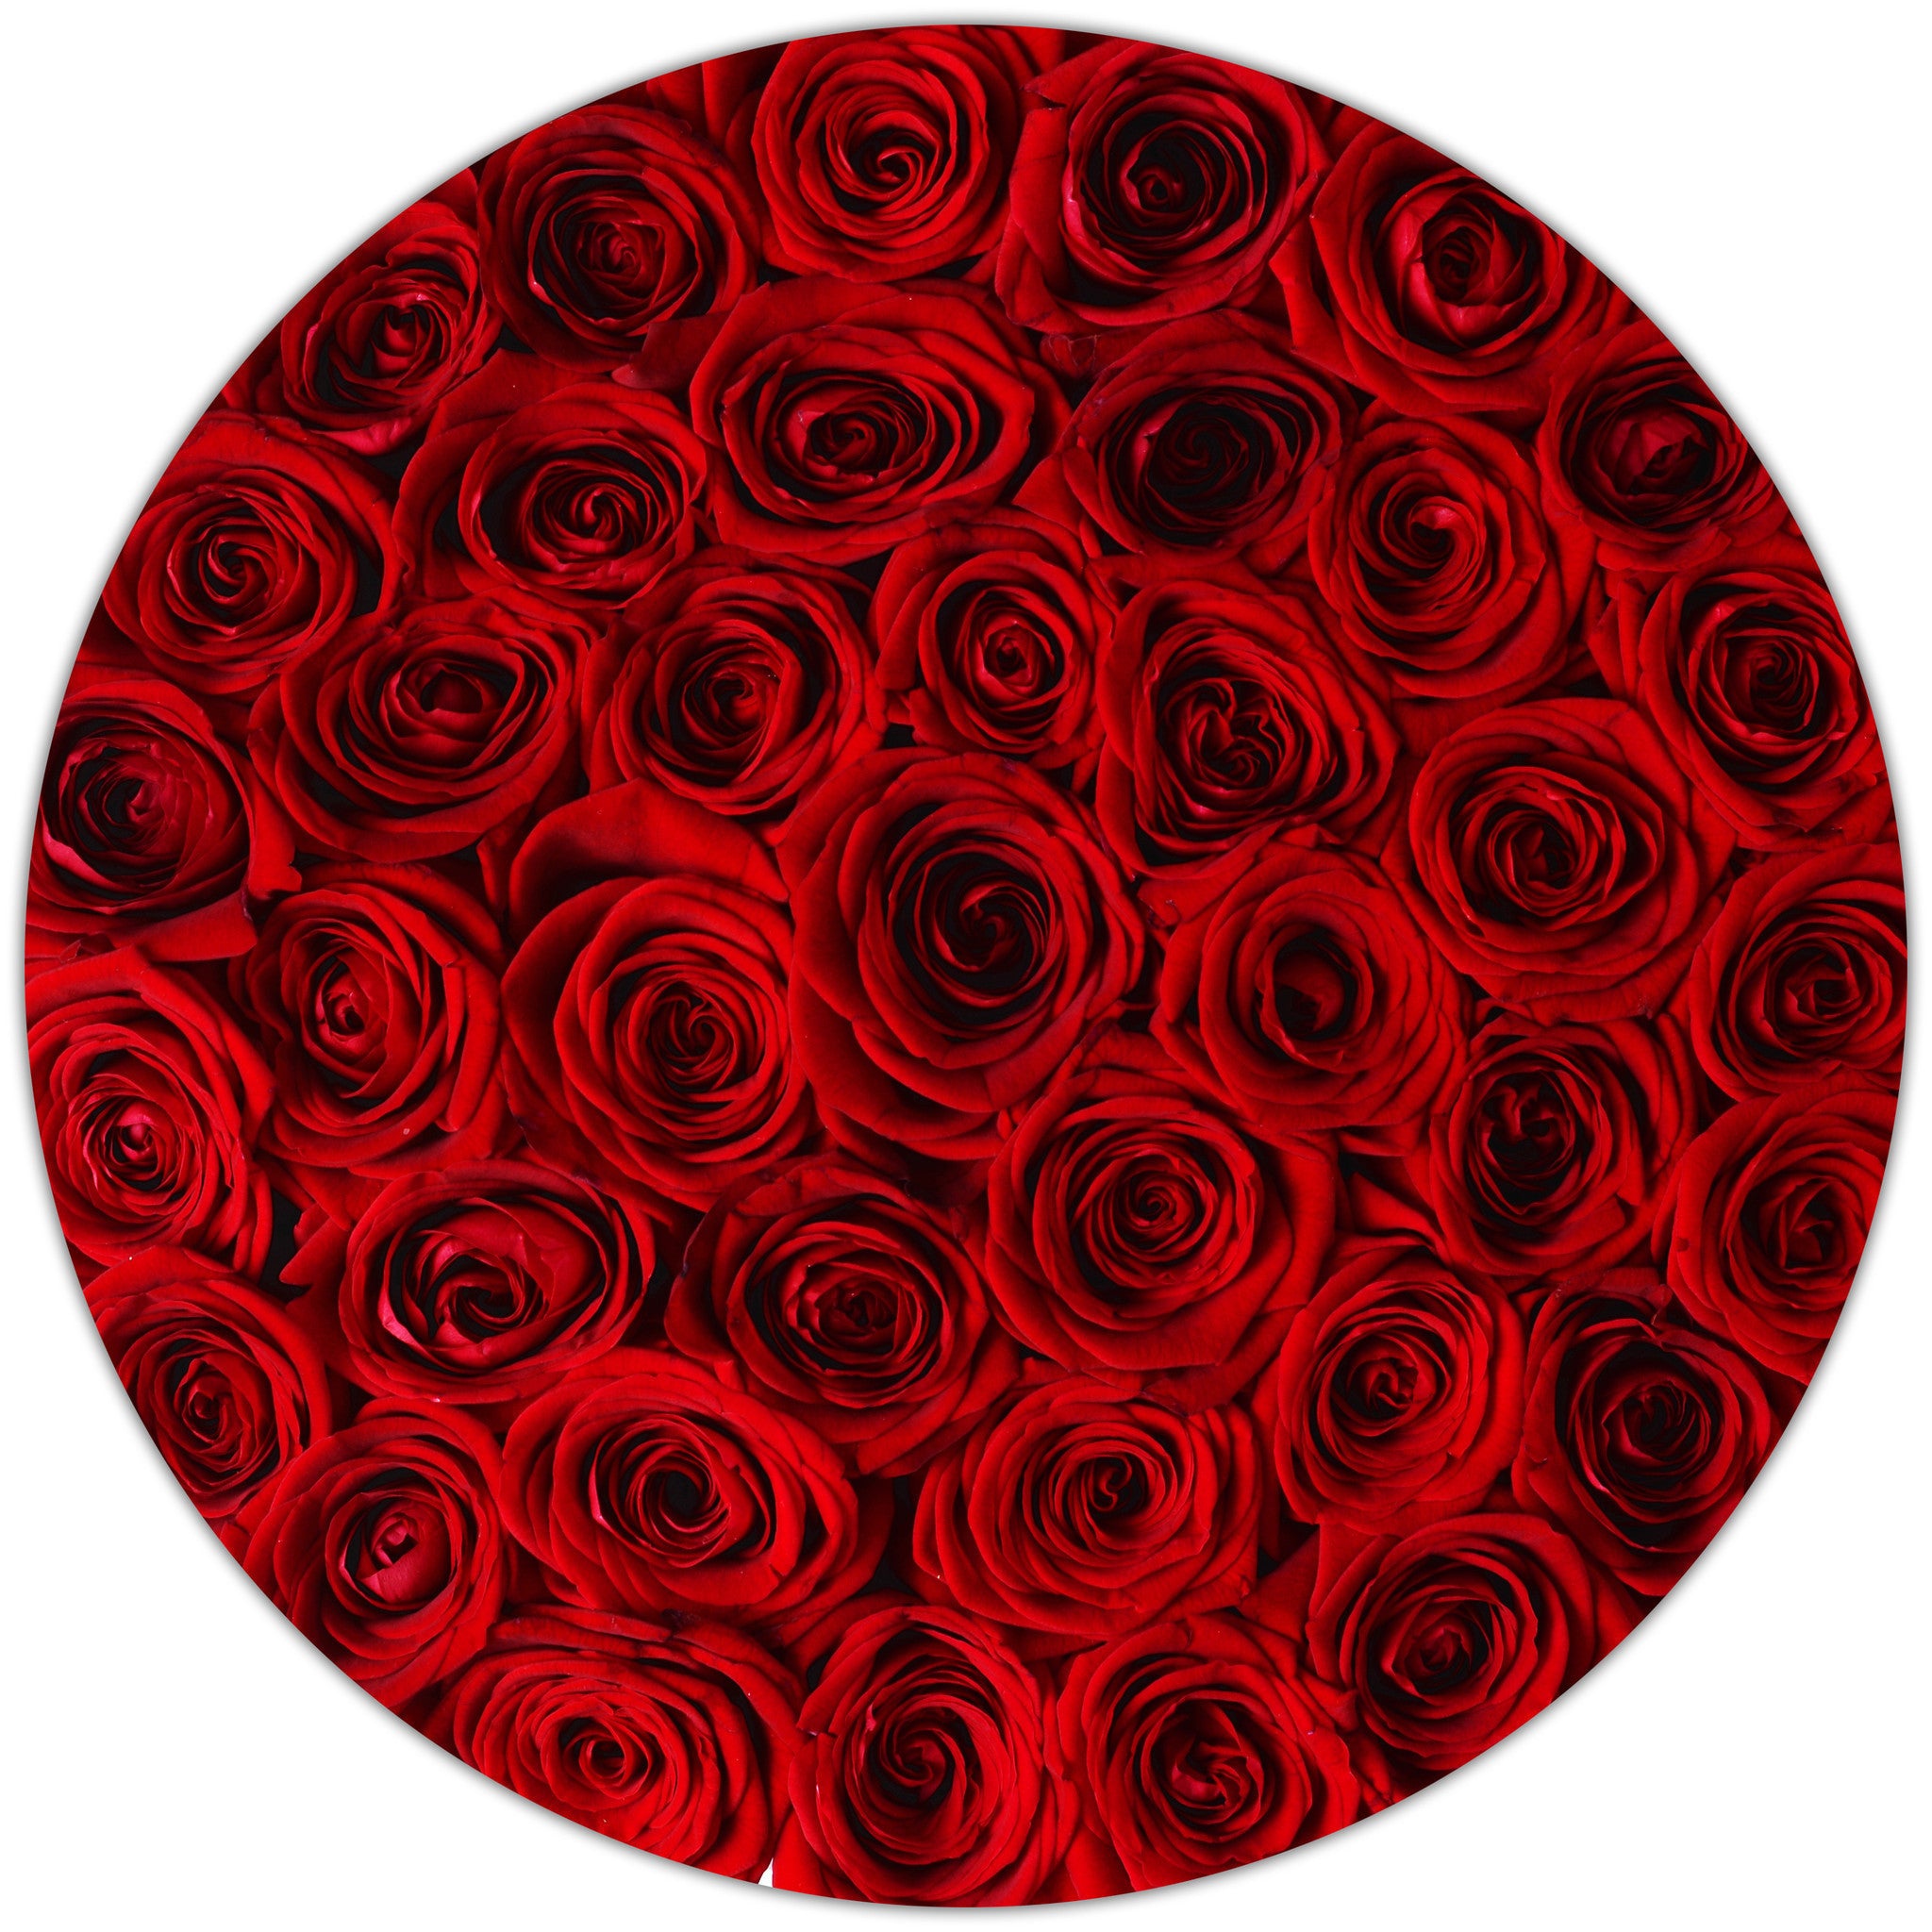 Medium - Red Roses - Black Box - The Million Roses Budapest